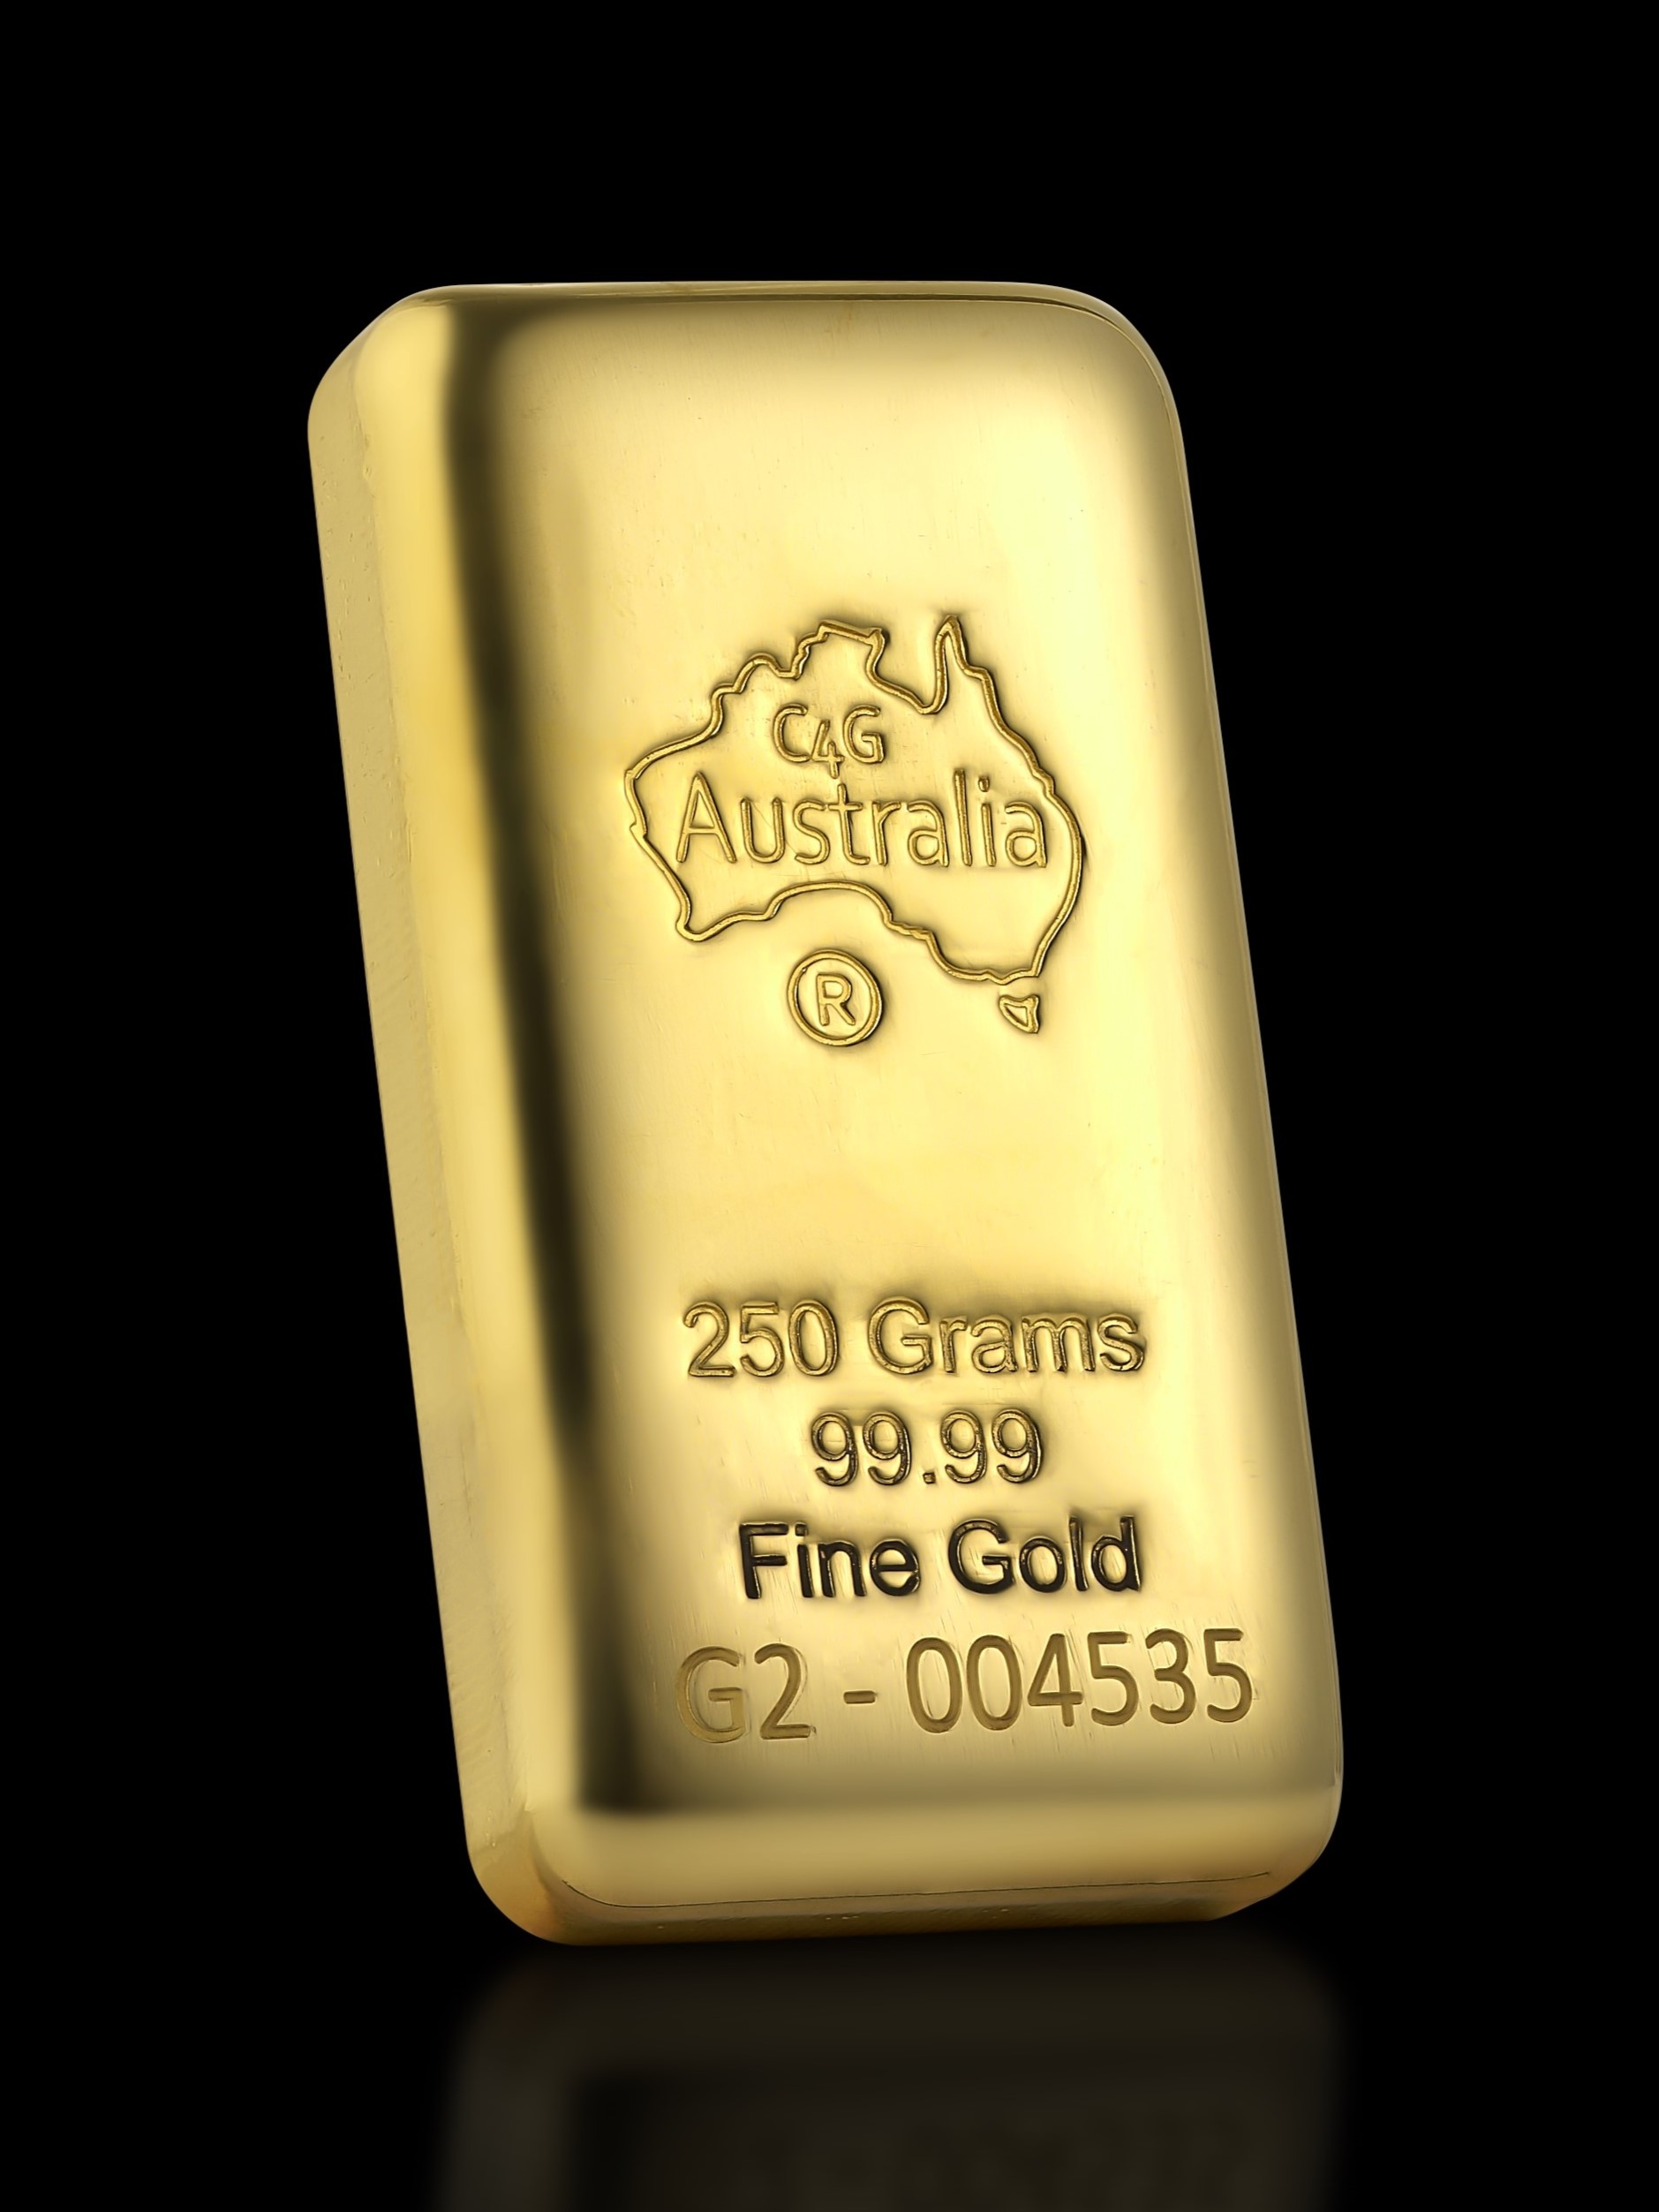 250 g C4G Cast Gold Bullion 99.99% Pure